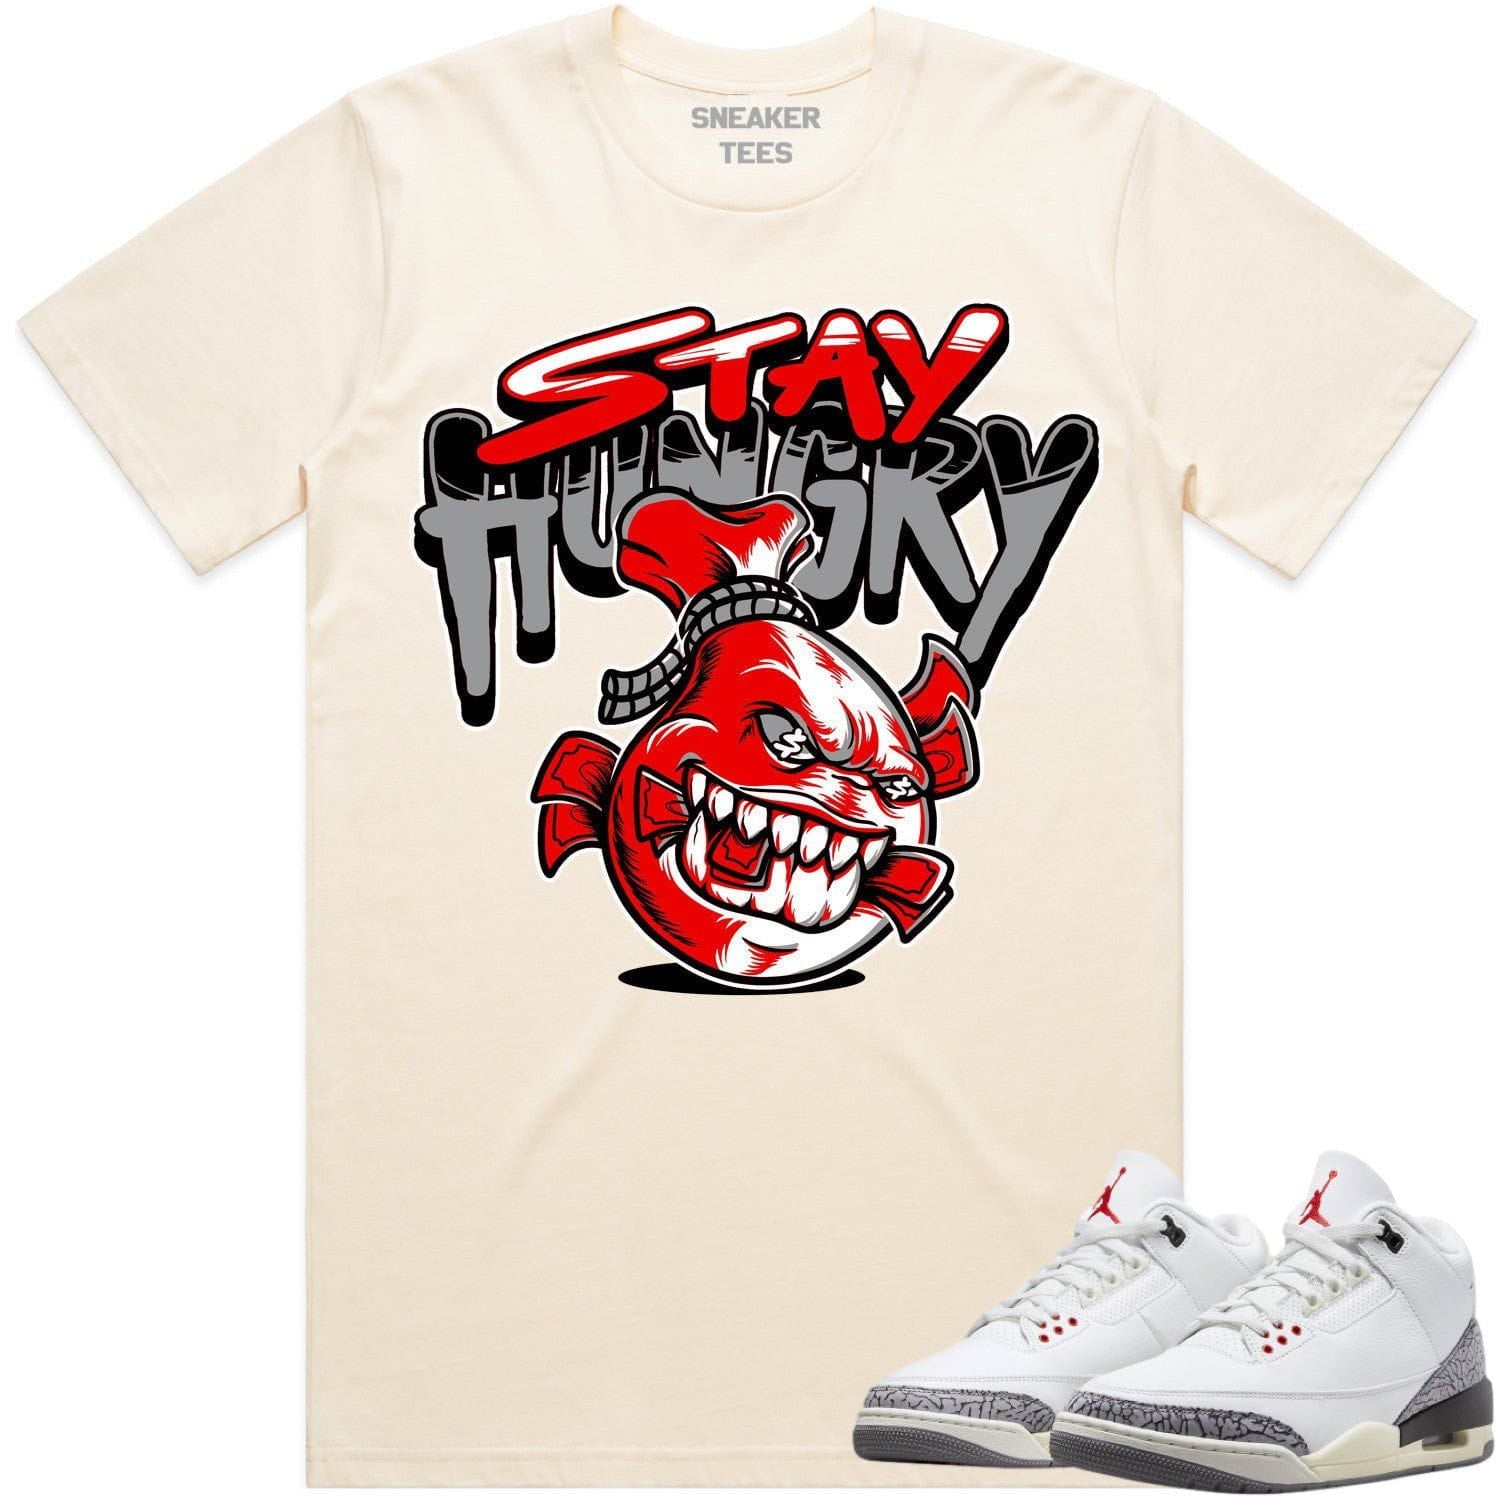 White Cement 3s Shirt - Jordan Retro 3 Reimagined Shirt - Stay Hungry